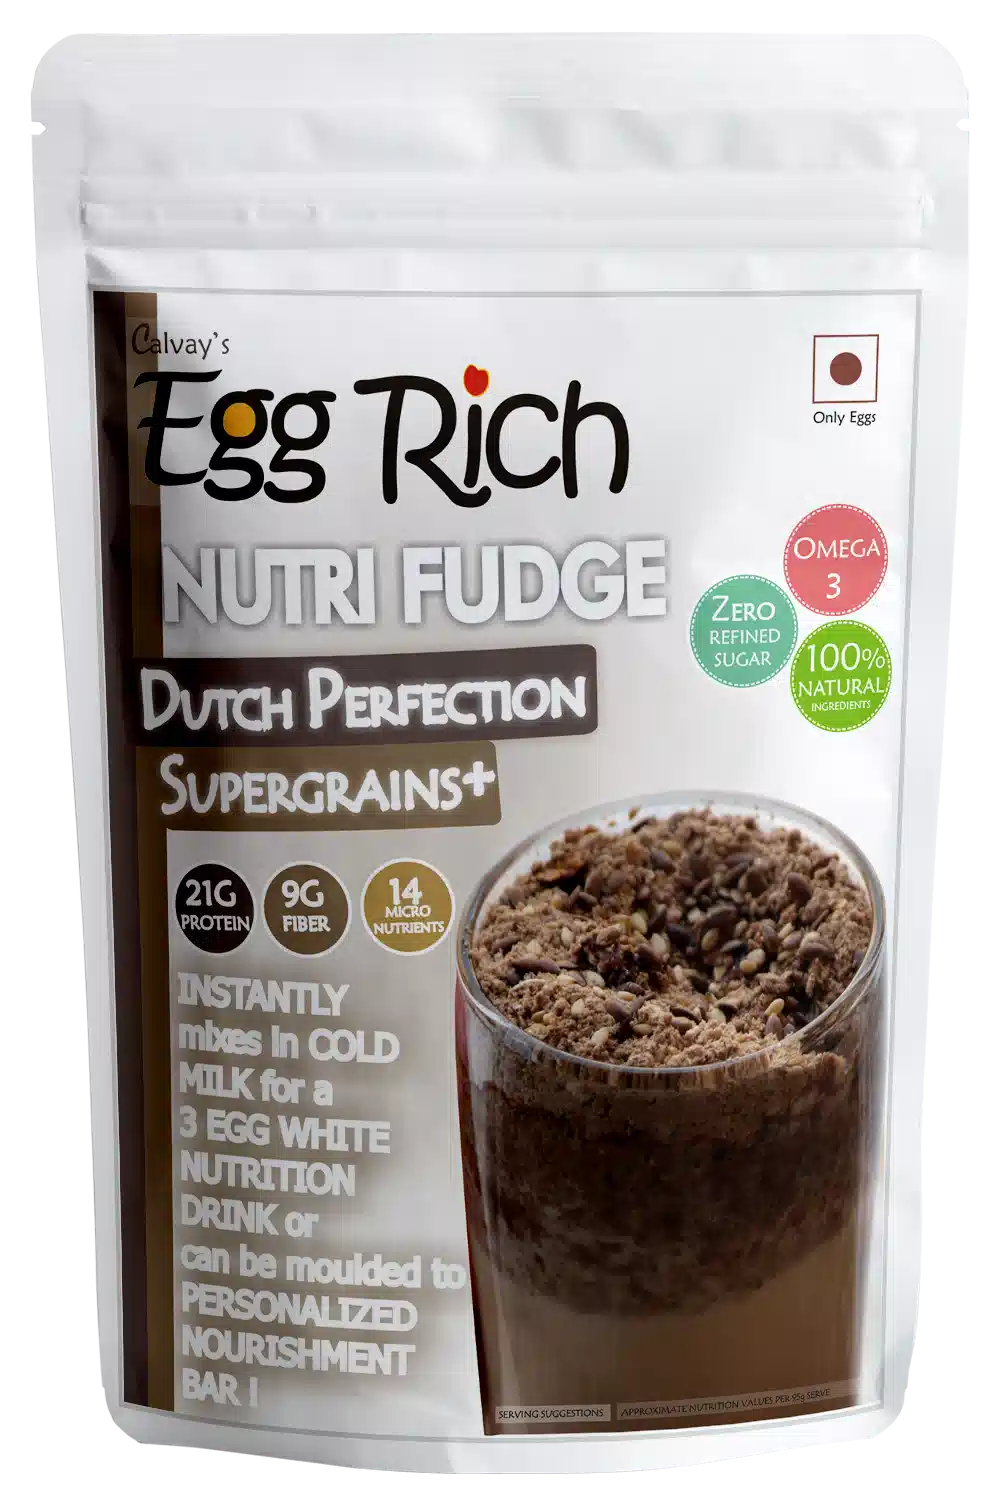 Image of Egg Rich Nutri Fudge pack of 7 